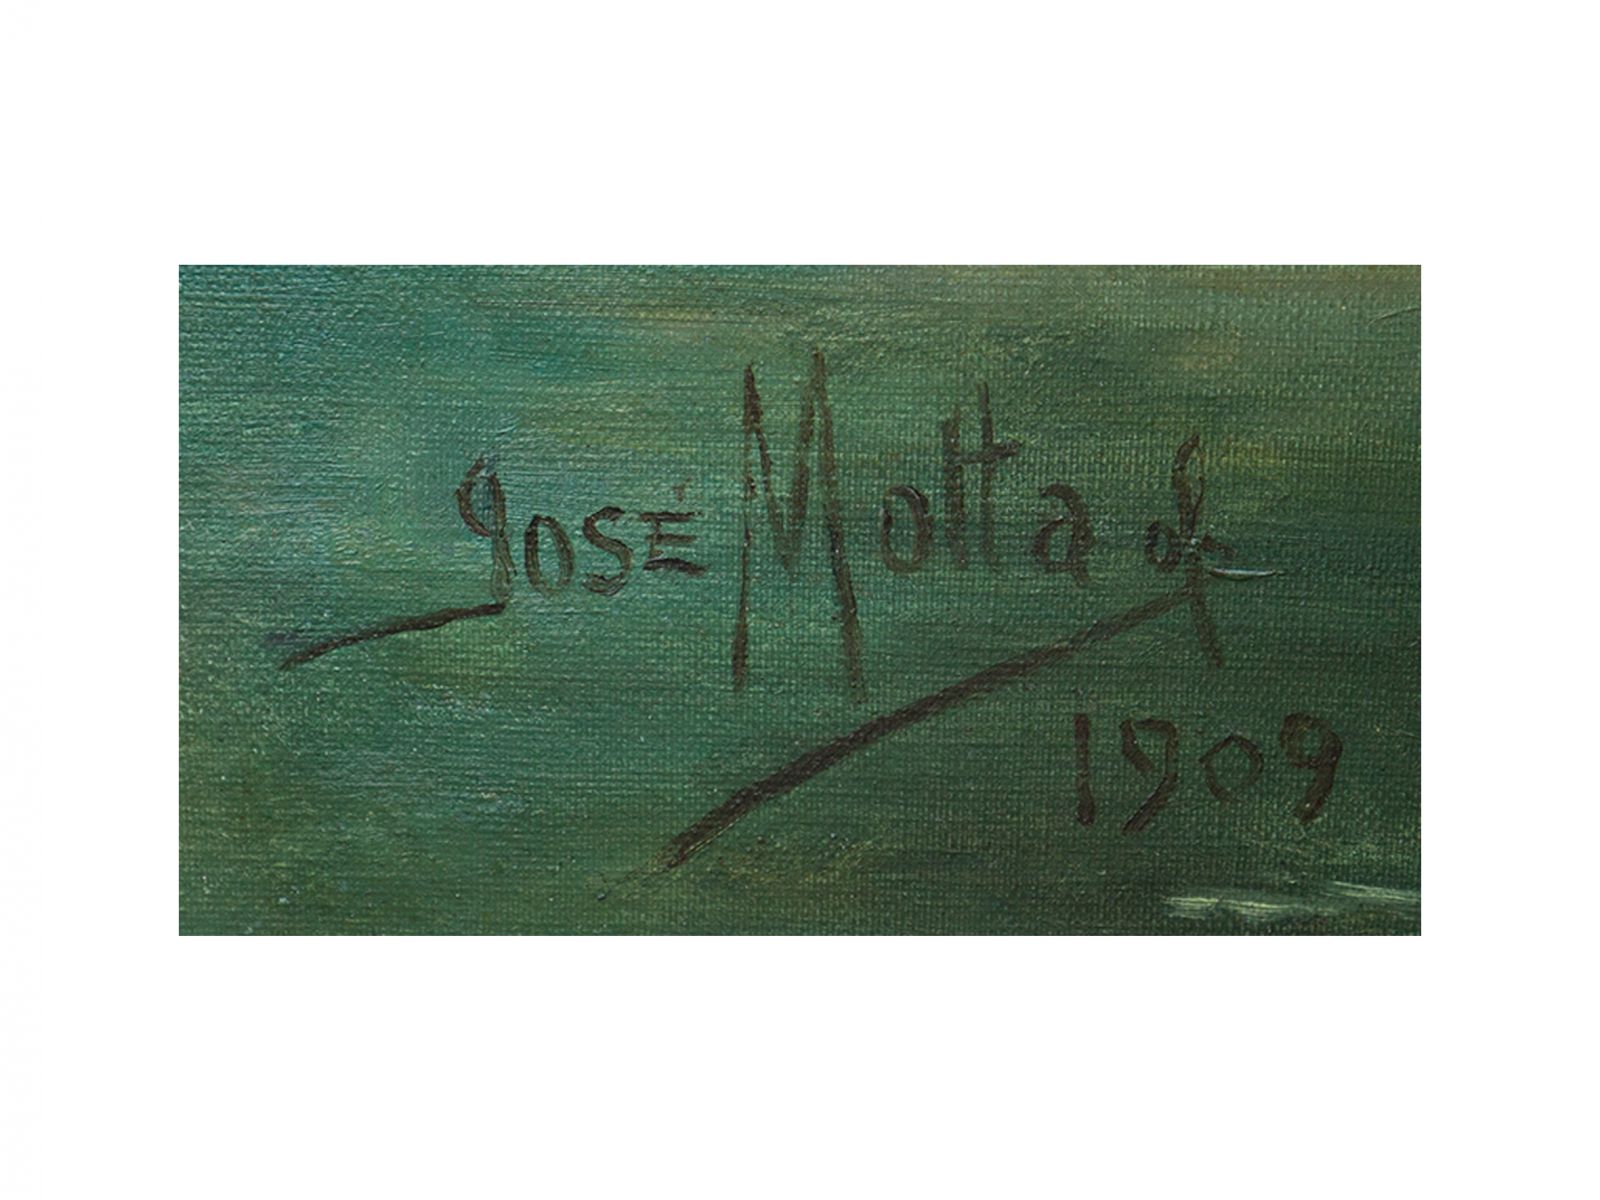 JOSÉ SERRA DA MOTTA (1883-1943)